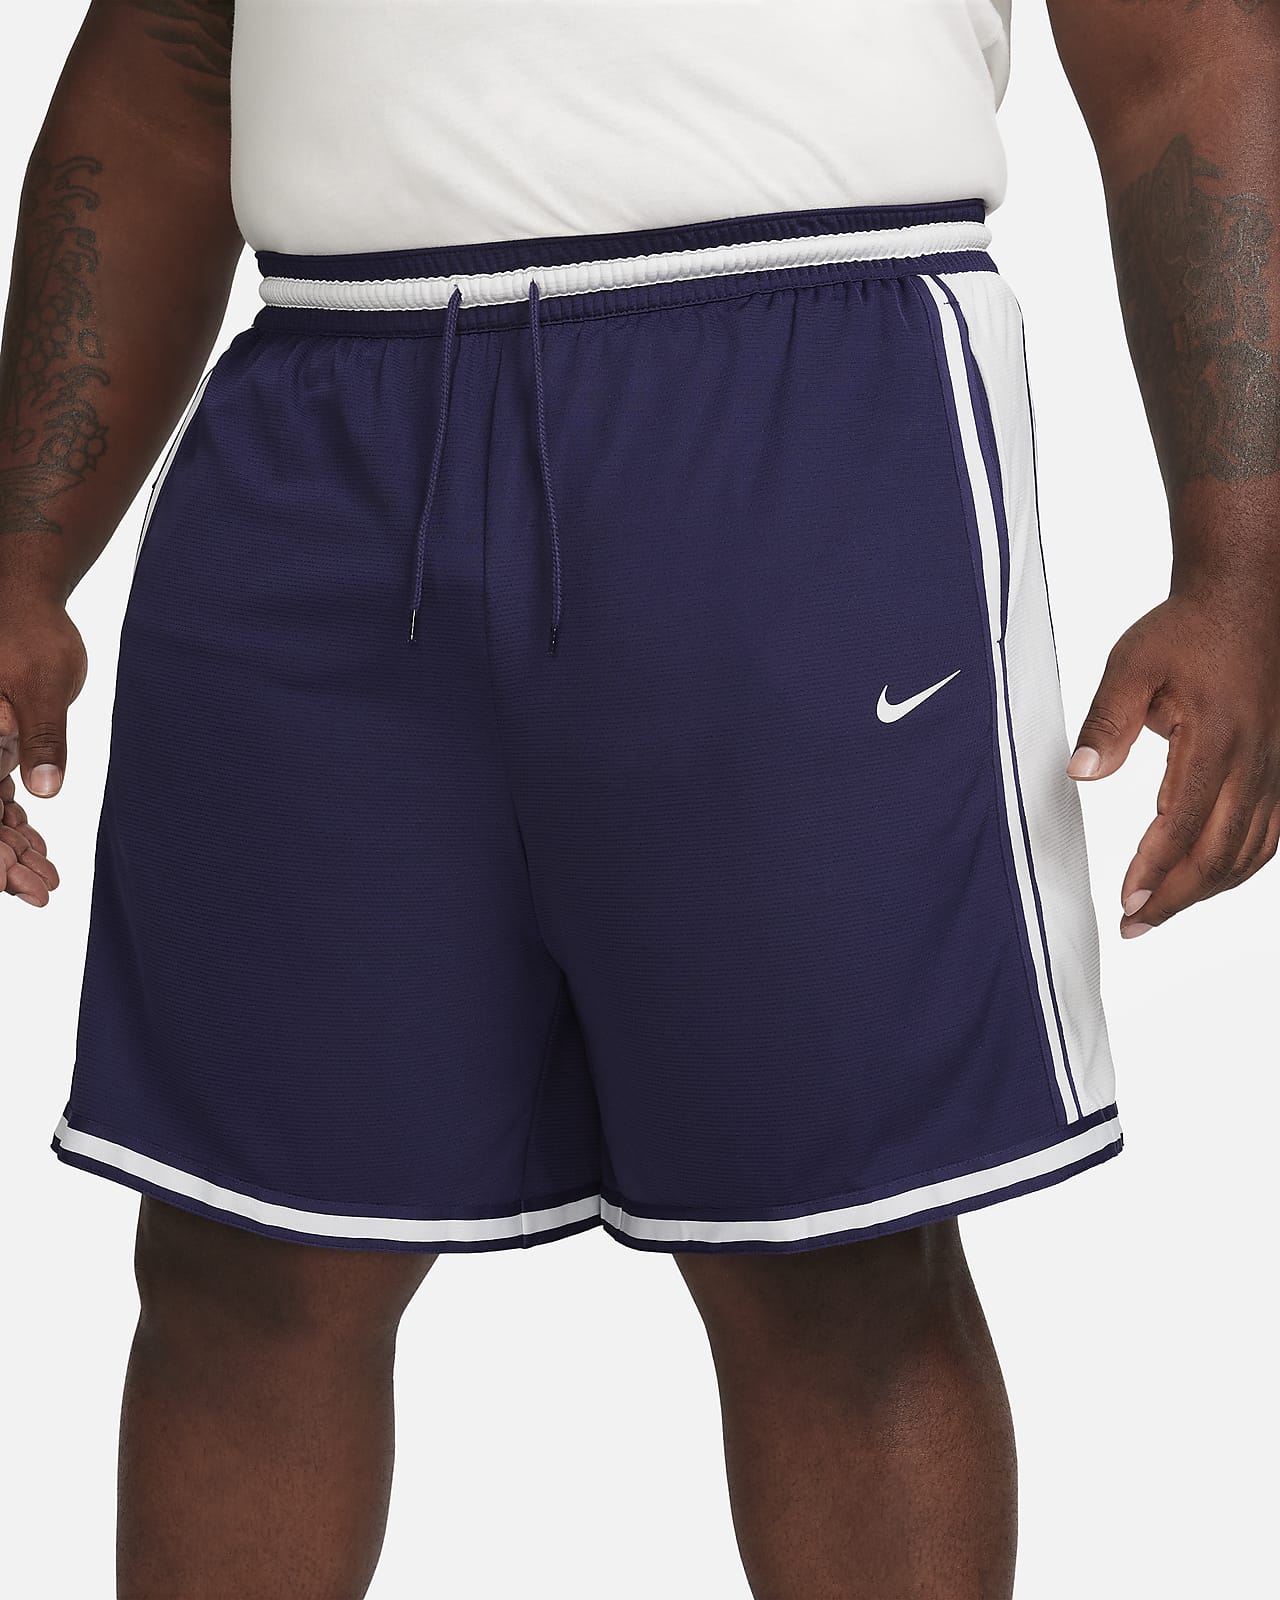 Nike Men's 8 Premium Basketball Shorts.